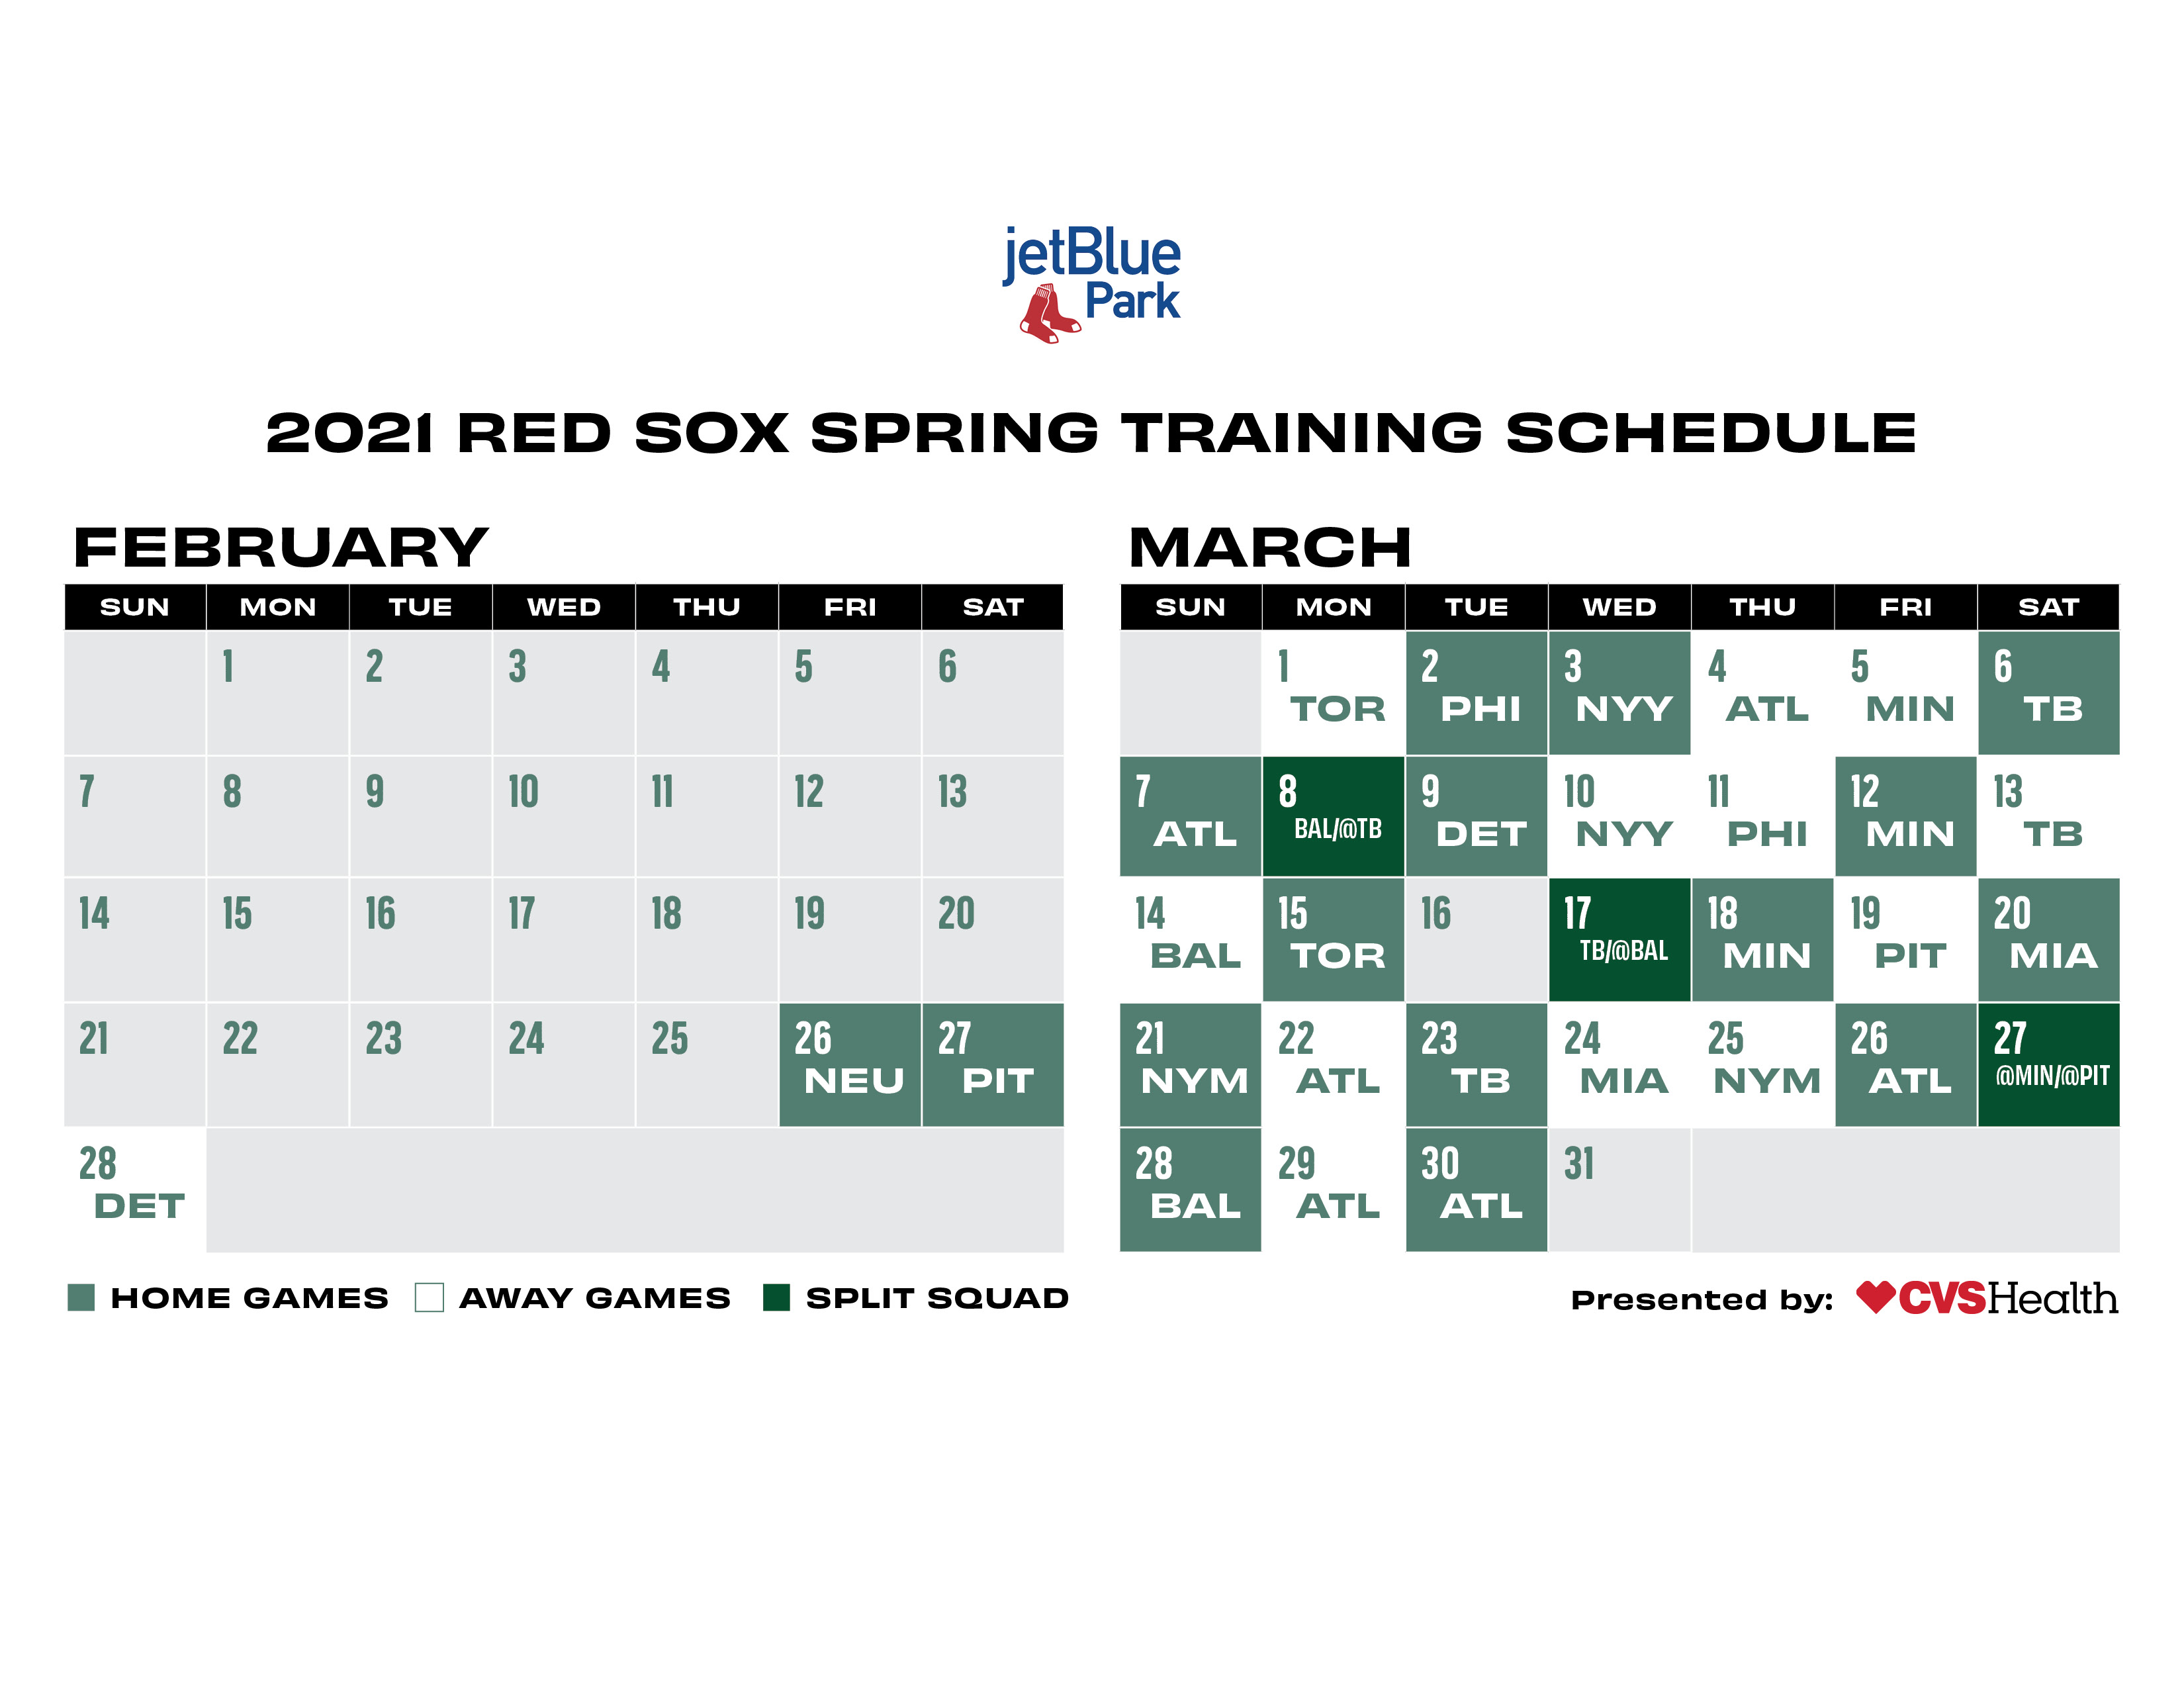 Spring training schedules